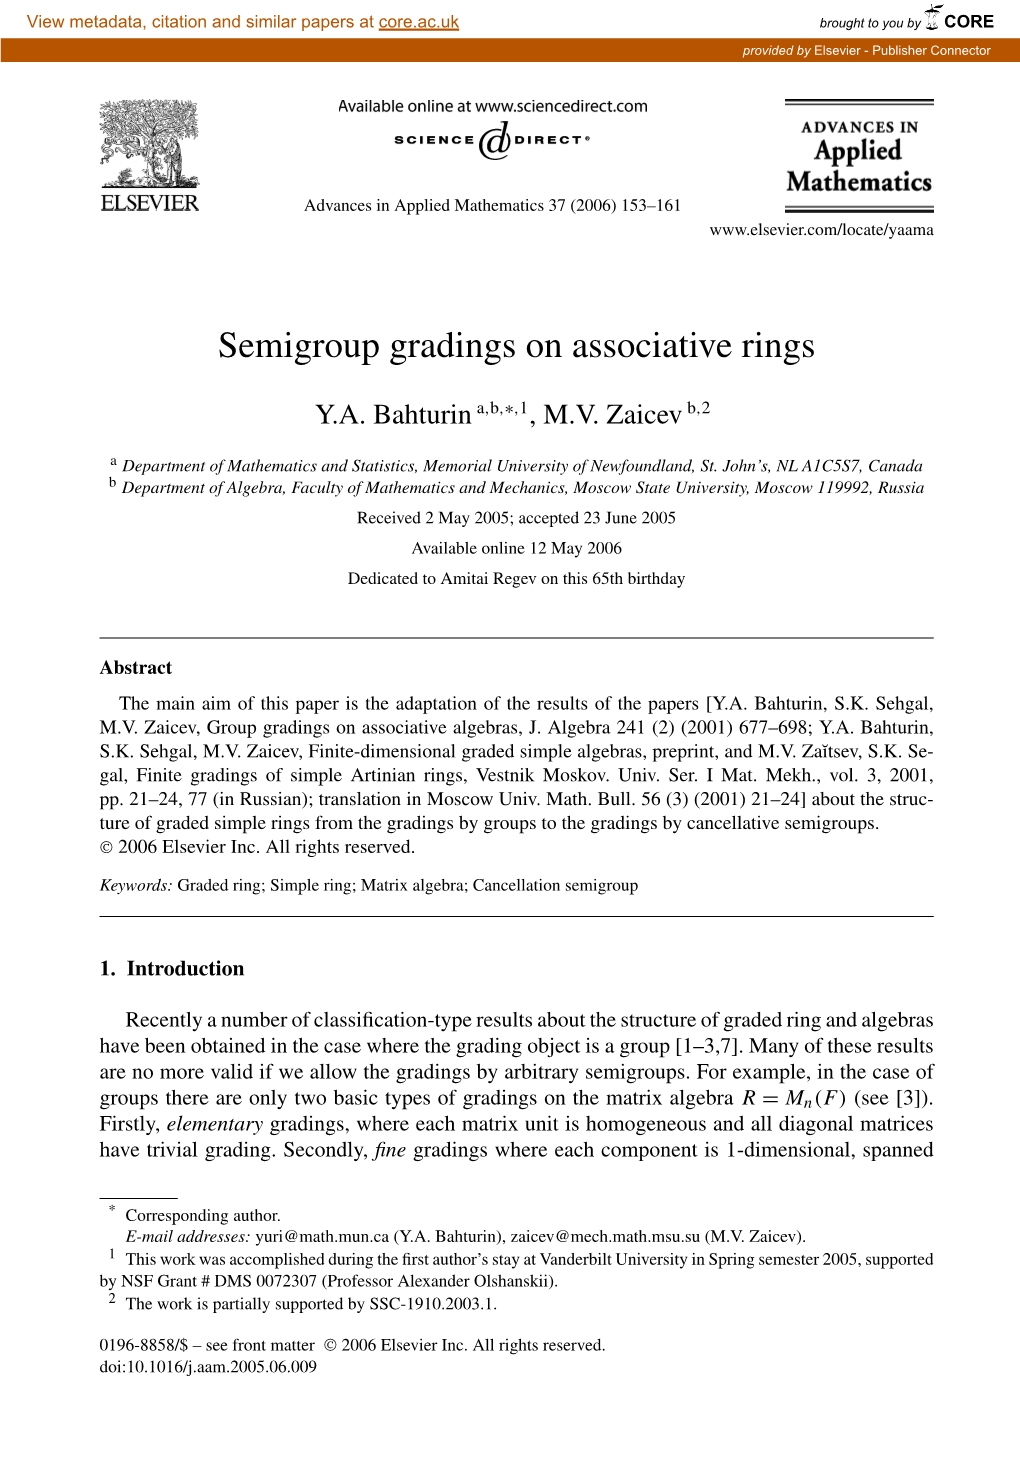 Semigroup Gradings on Associative Rings